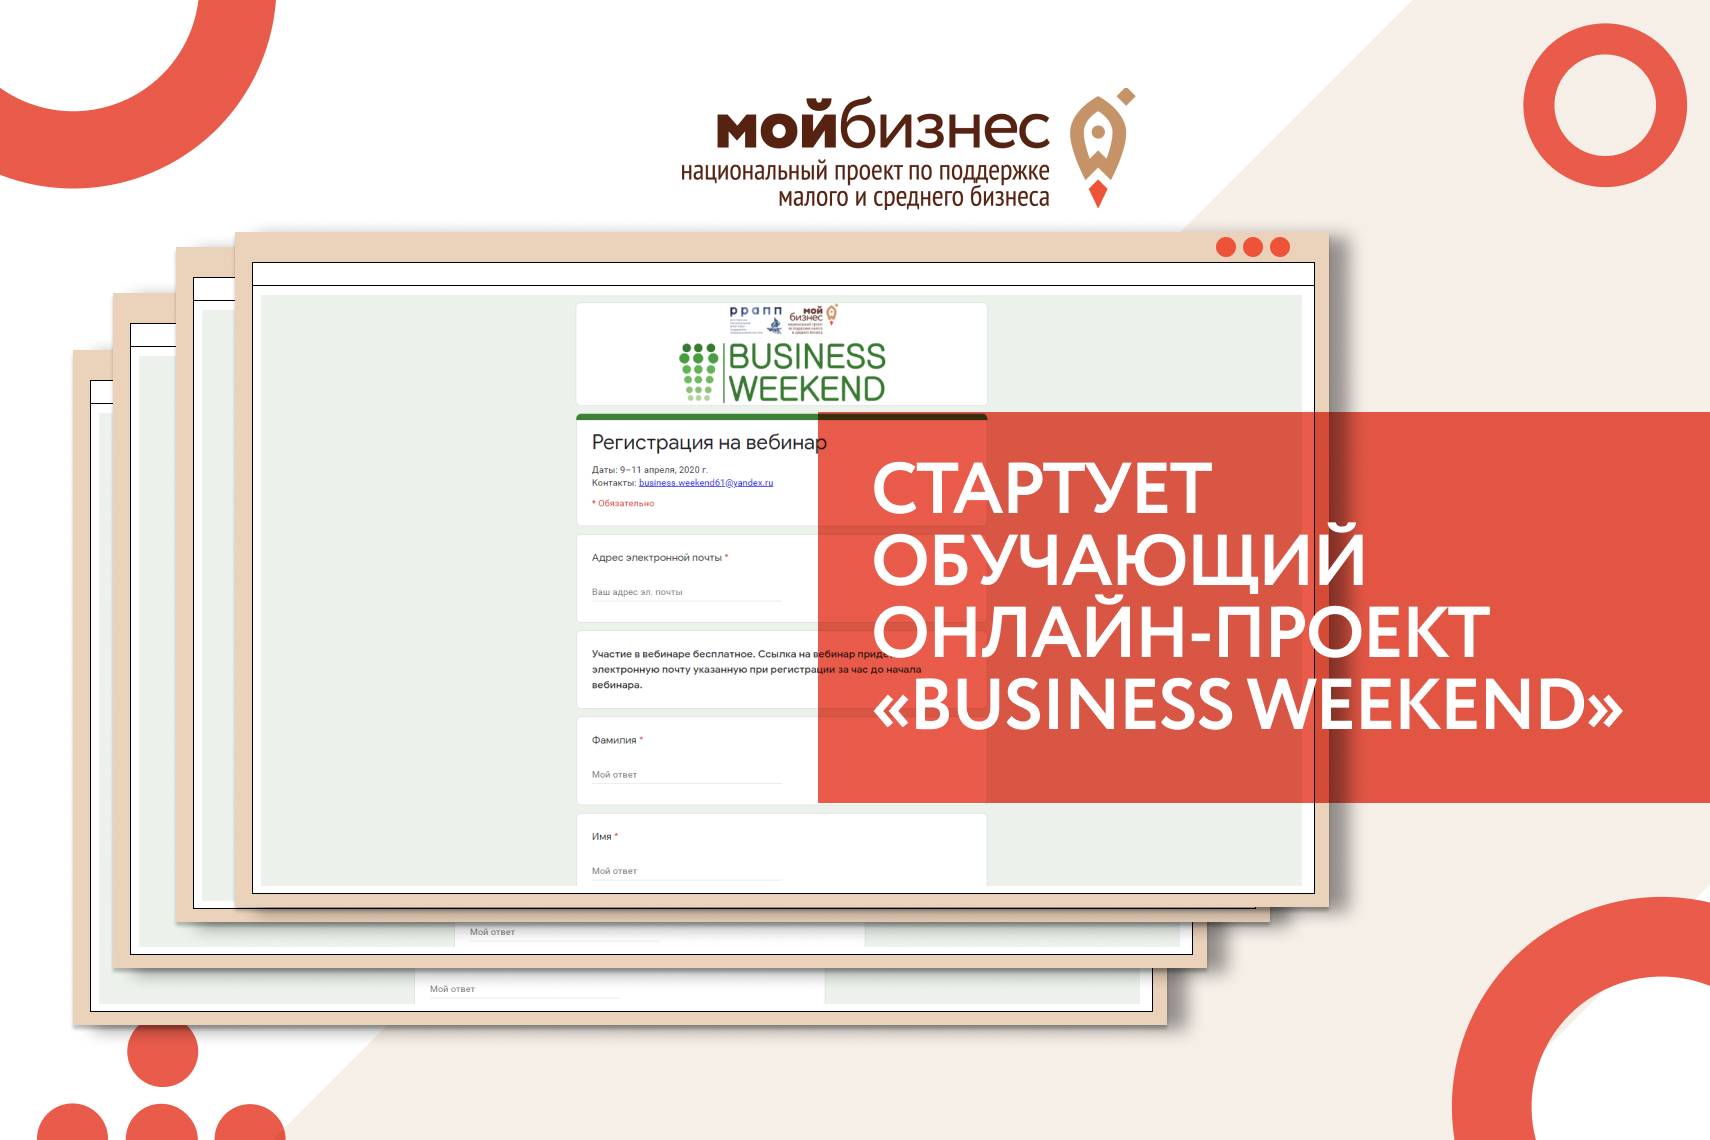 9 апреля стартует обучающий онлайн-проект «Business Weekend» в г. Волгодонске.